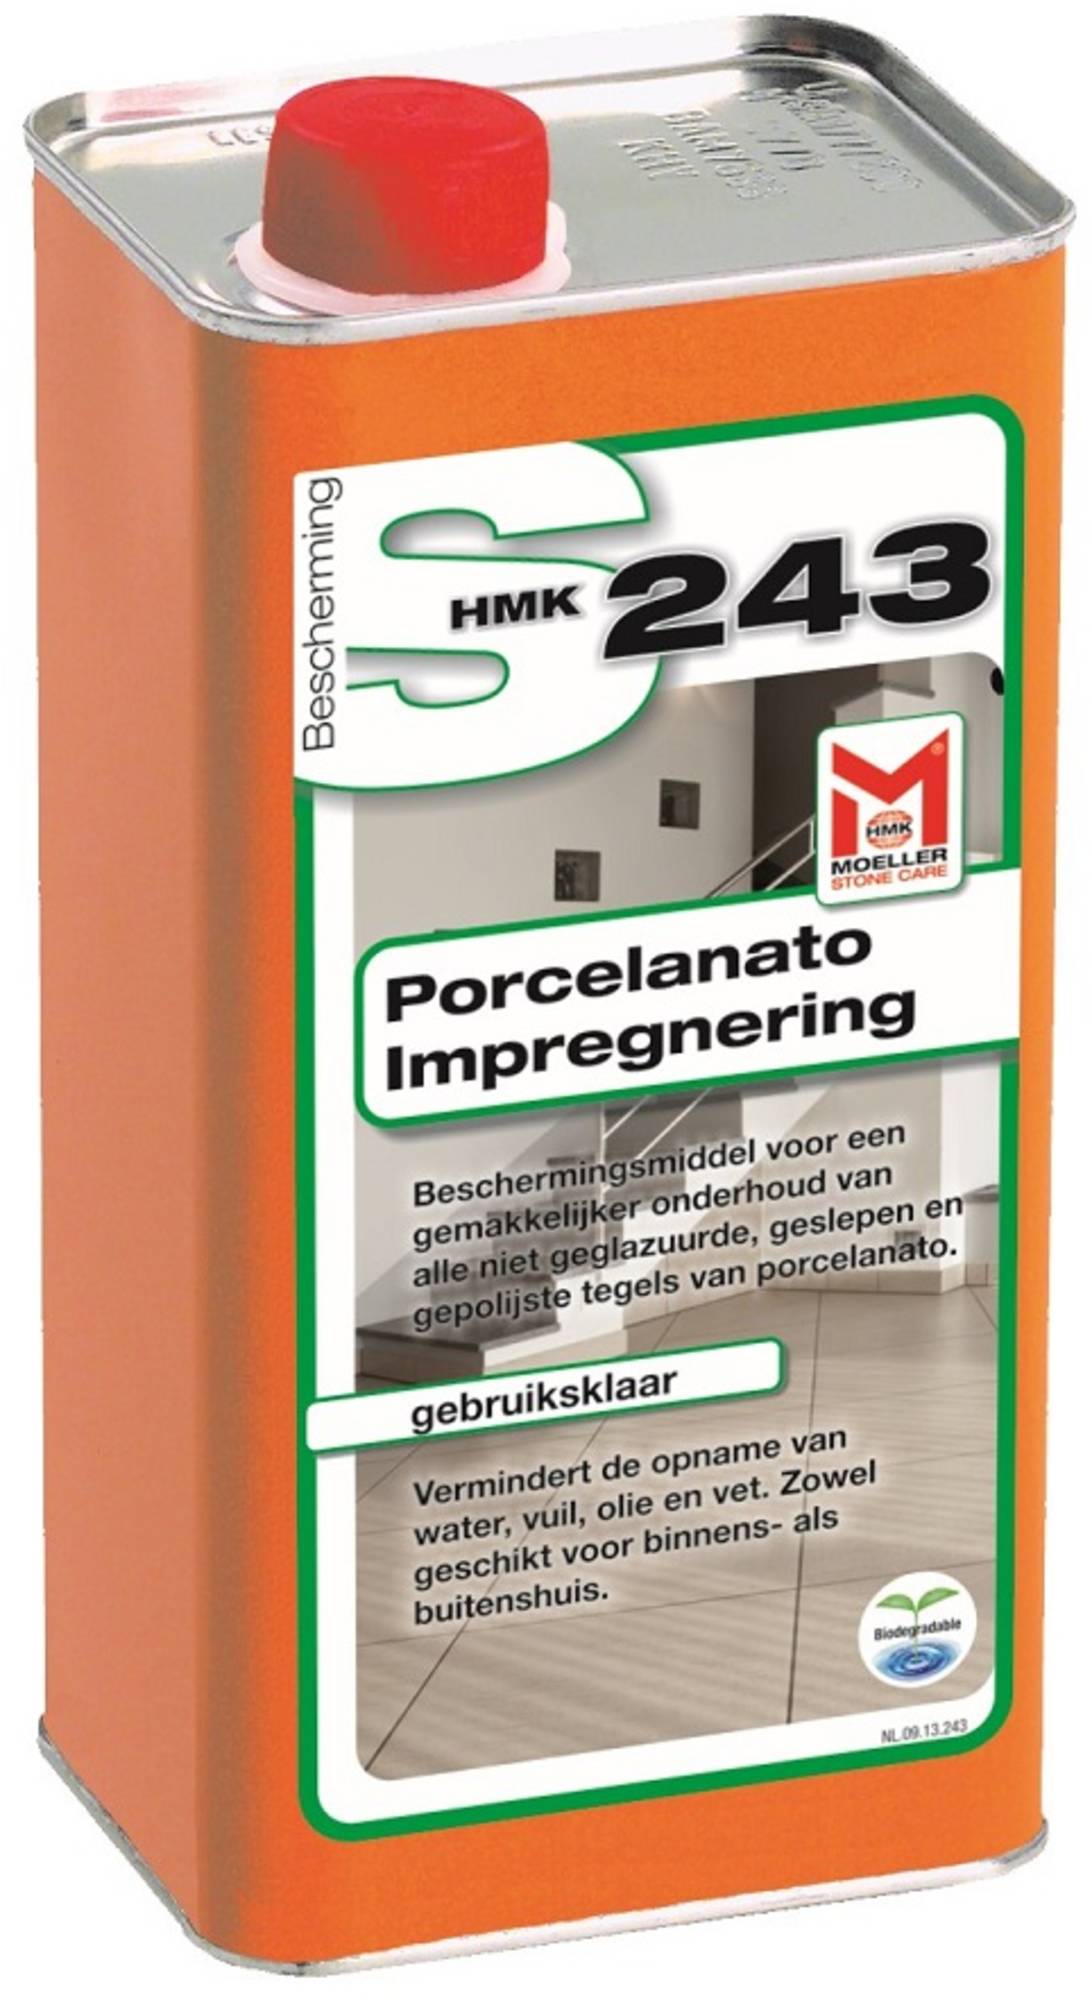 HMK S243 Porcelanato impregnering - kleurloos